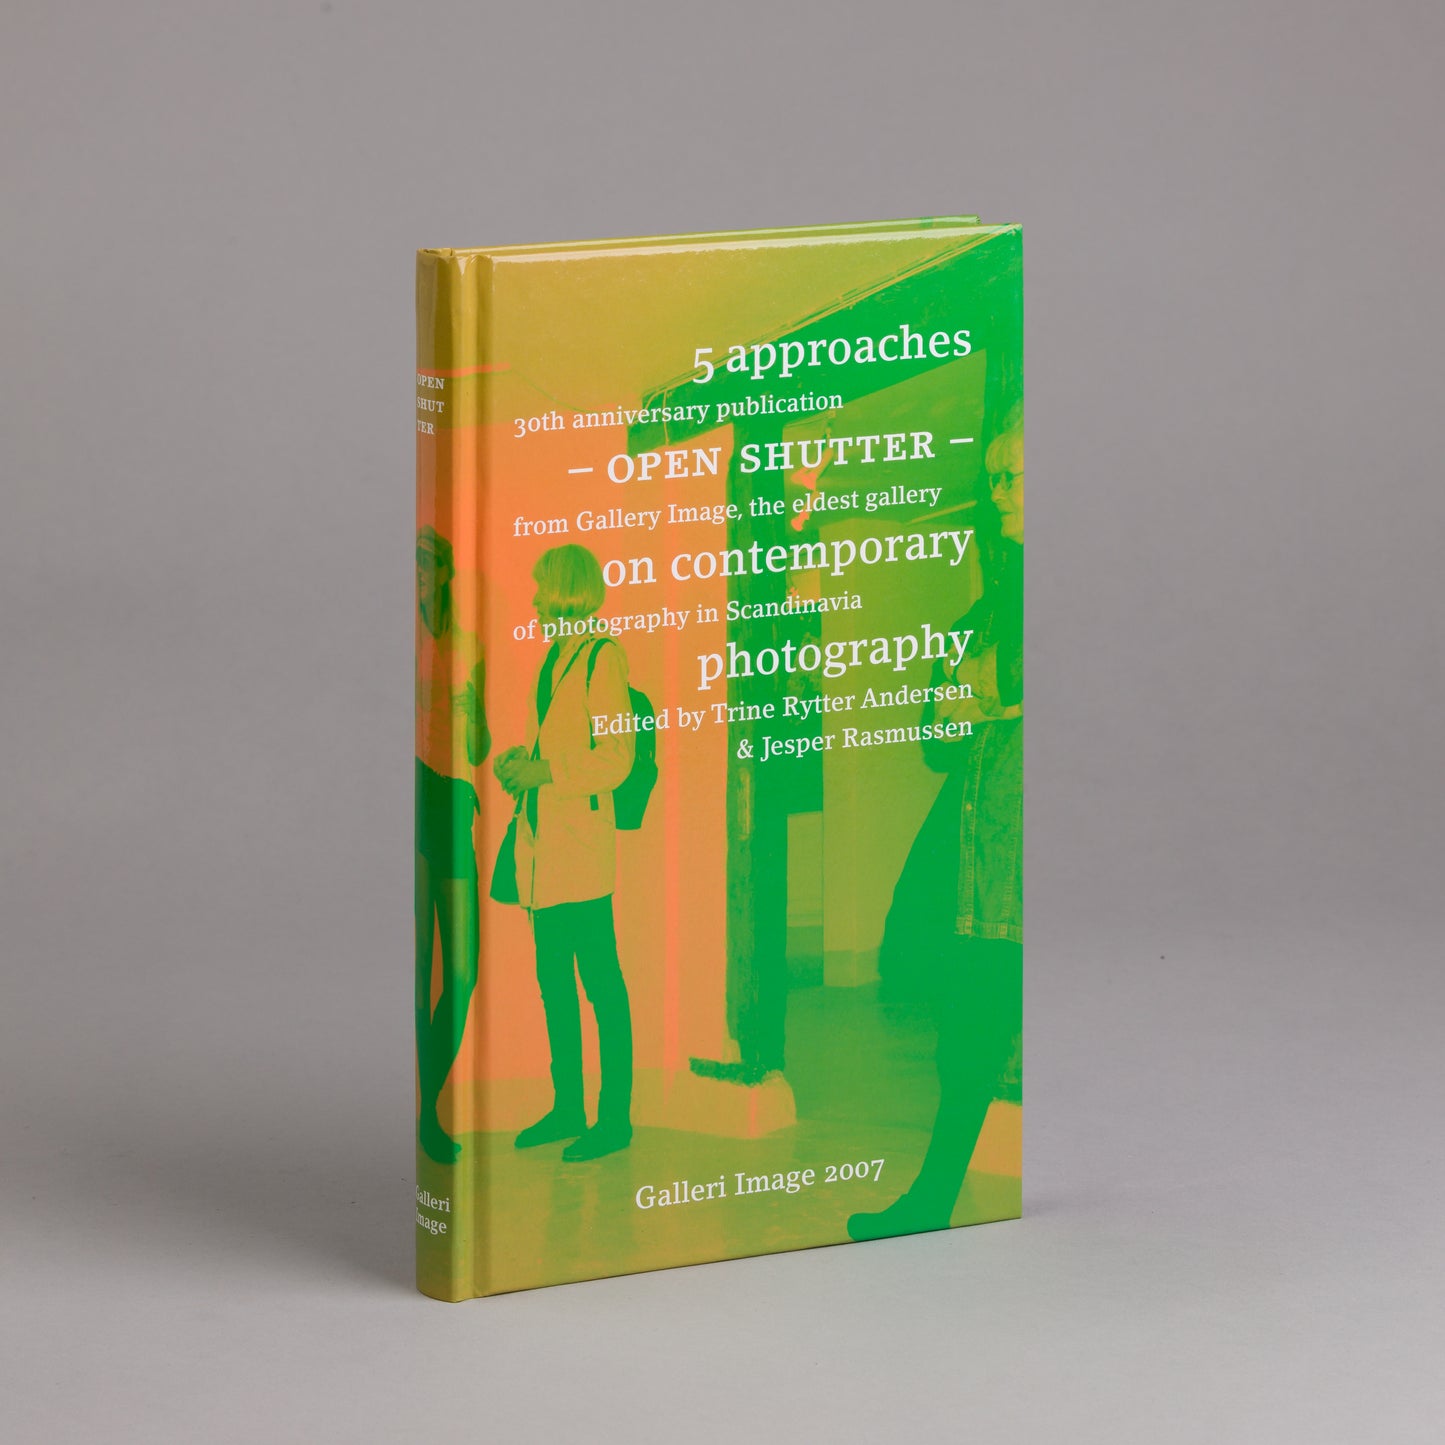 Open Shutter - 5 approaches on contemporary photography, ed. by Trine Rytter Andersen & Jesper Rasmussen